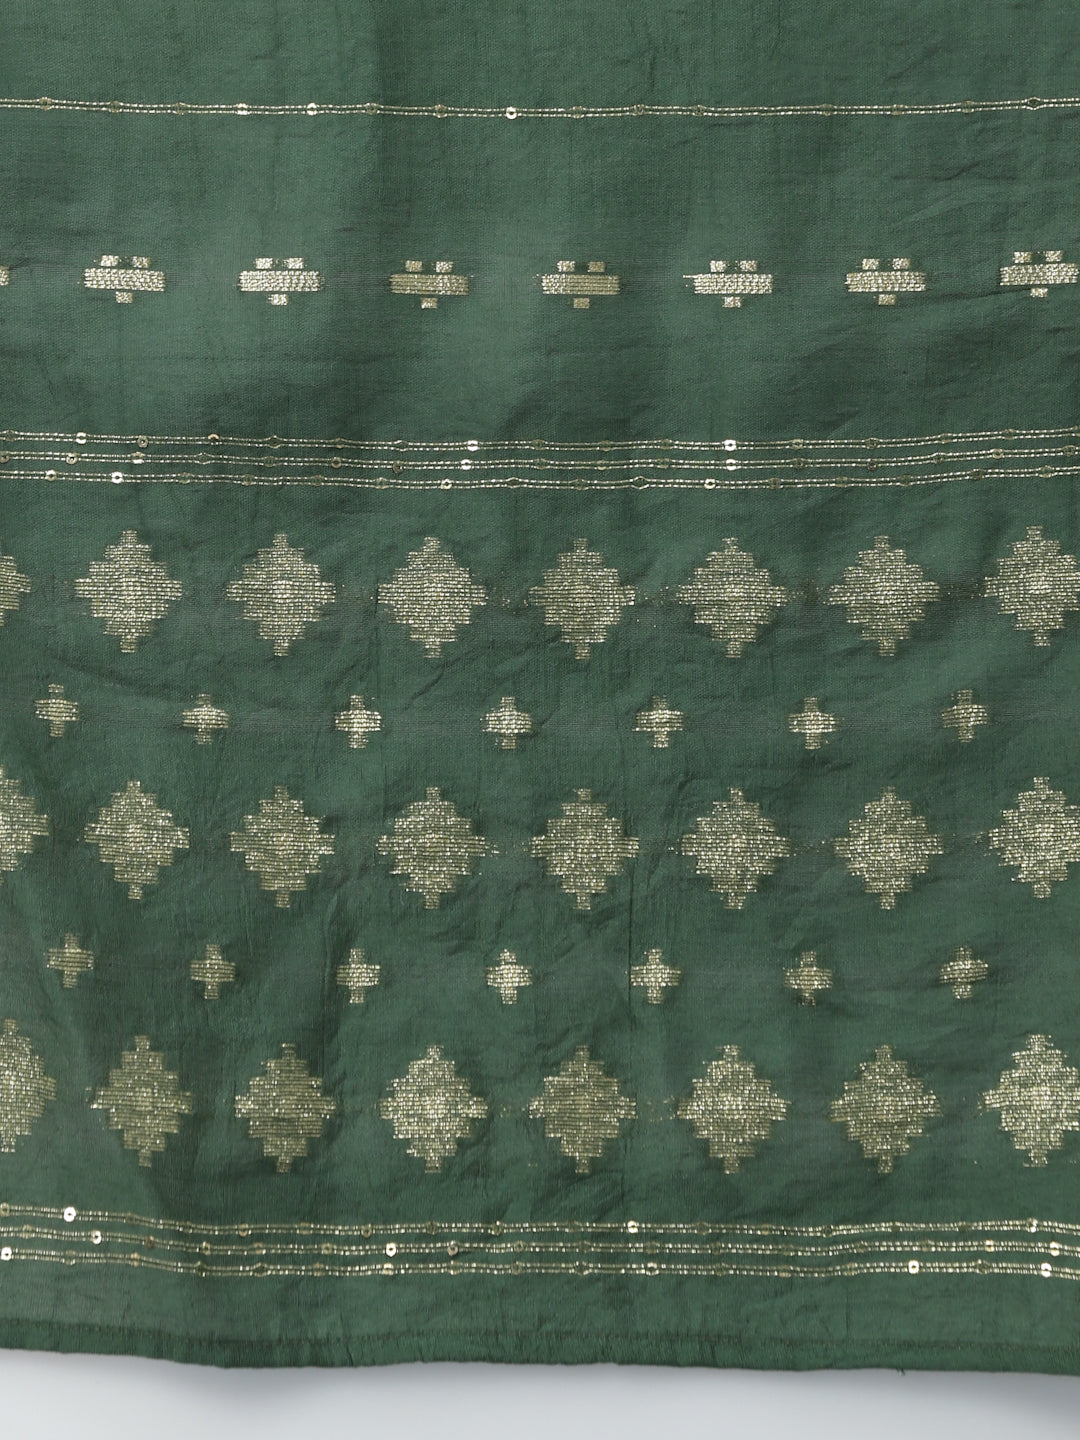 Green Embellished Gathered Kurta, Dupatta & Trouser Set - ARH841